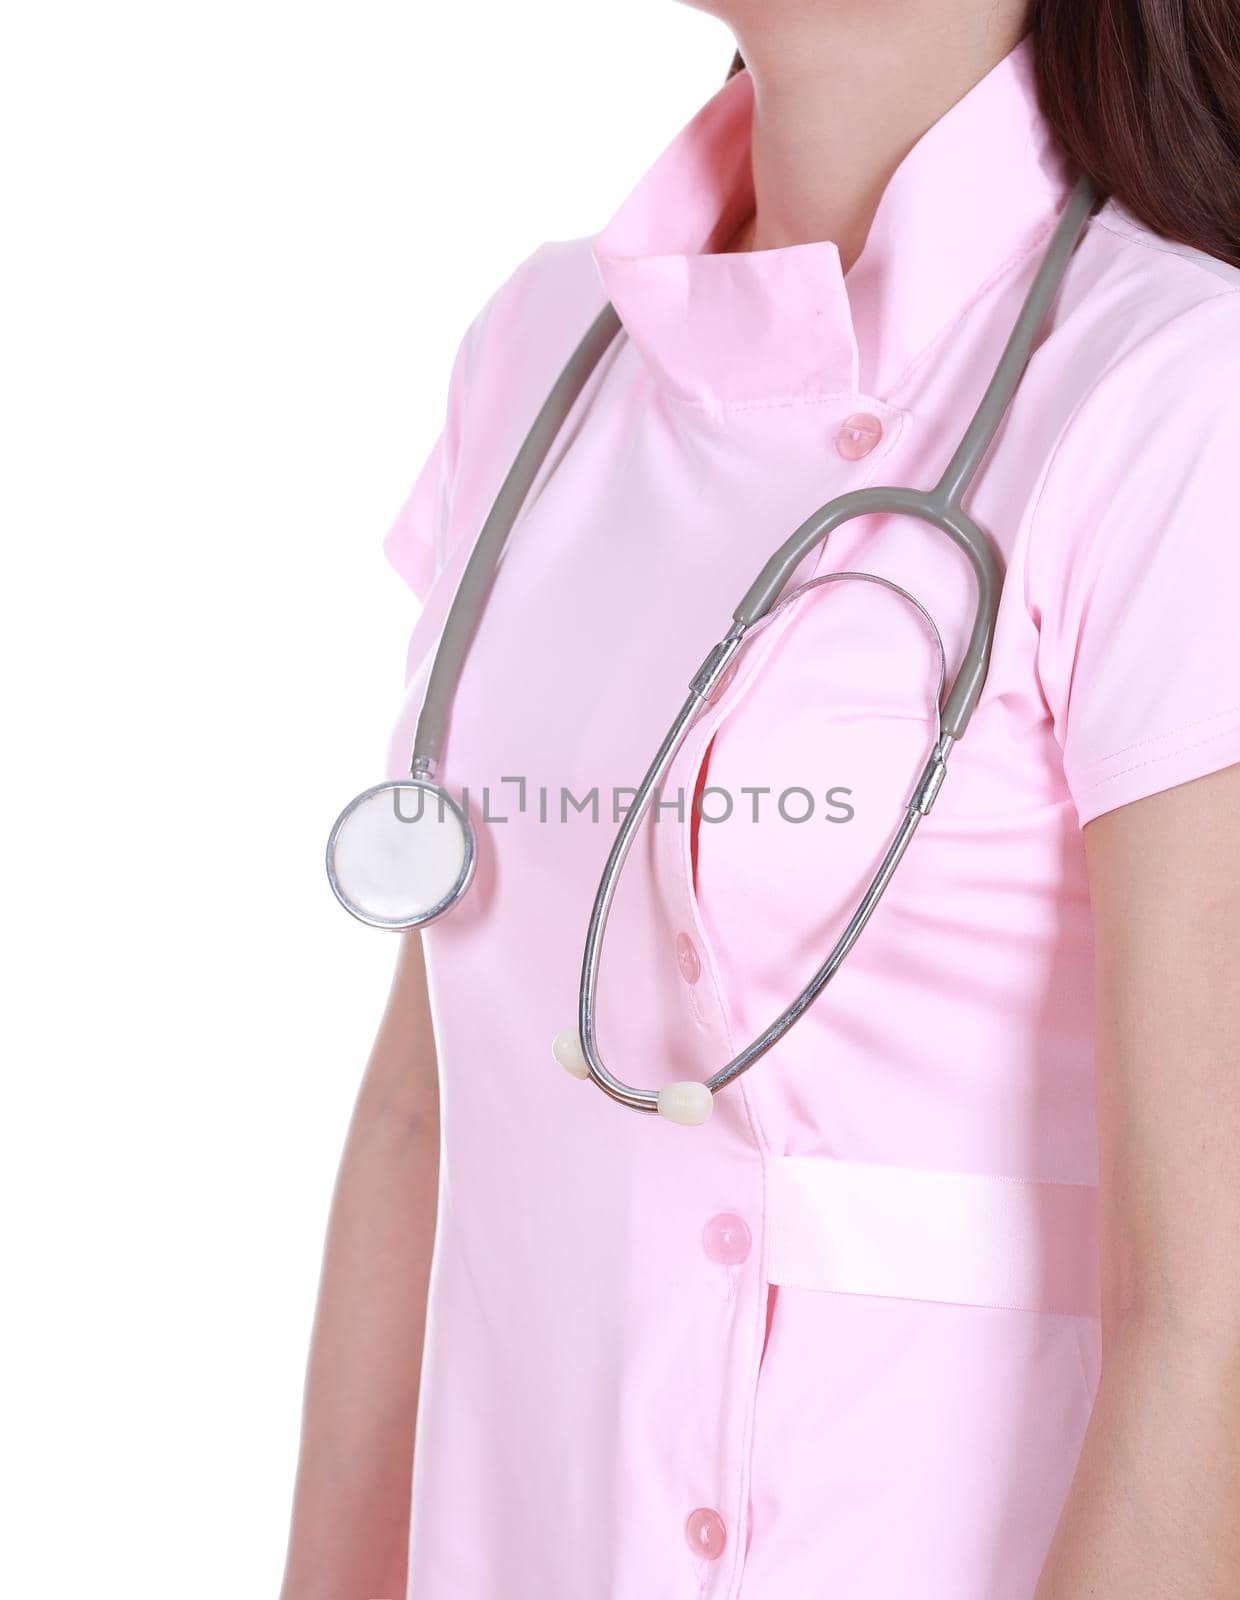 stethoscope with nurse isolated on white background by geargodz